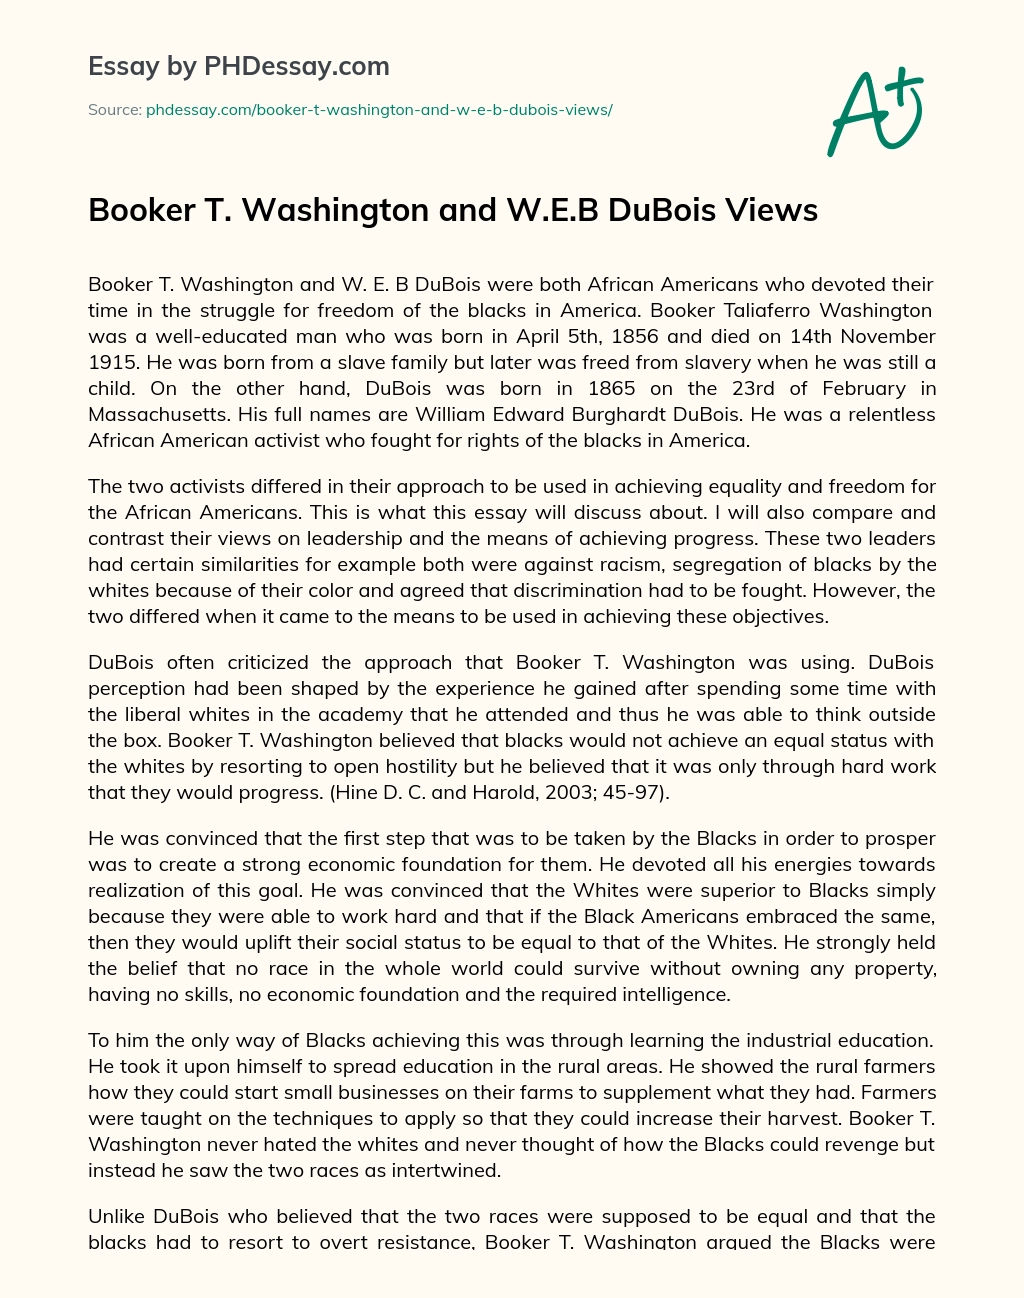 Booker T. Washington and W.E.B DuBois Views essay